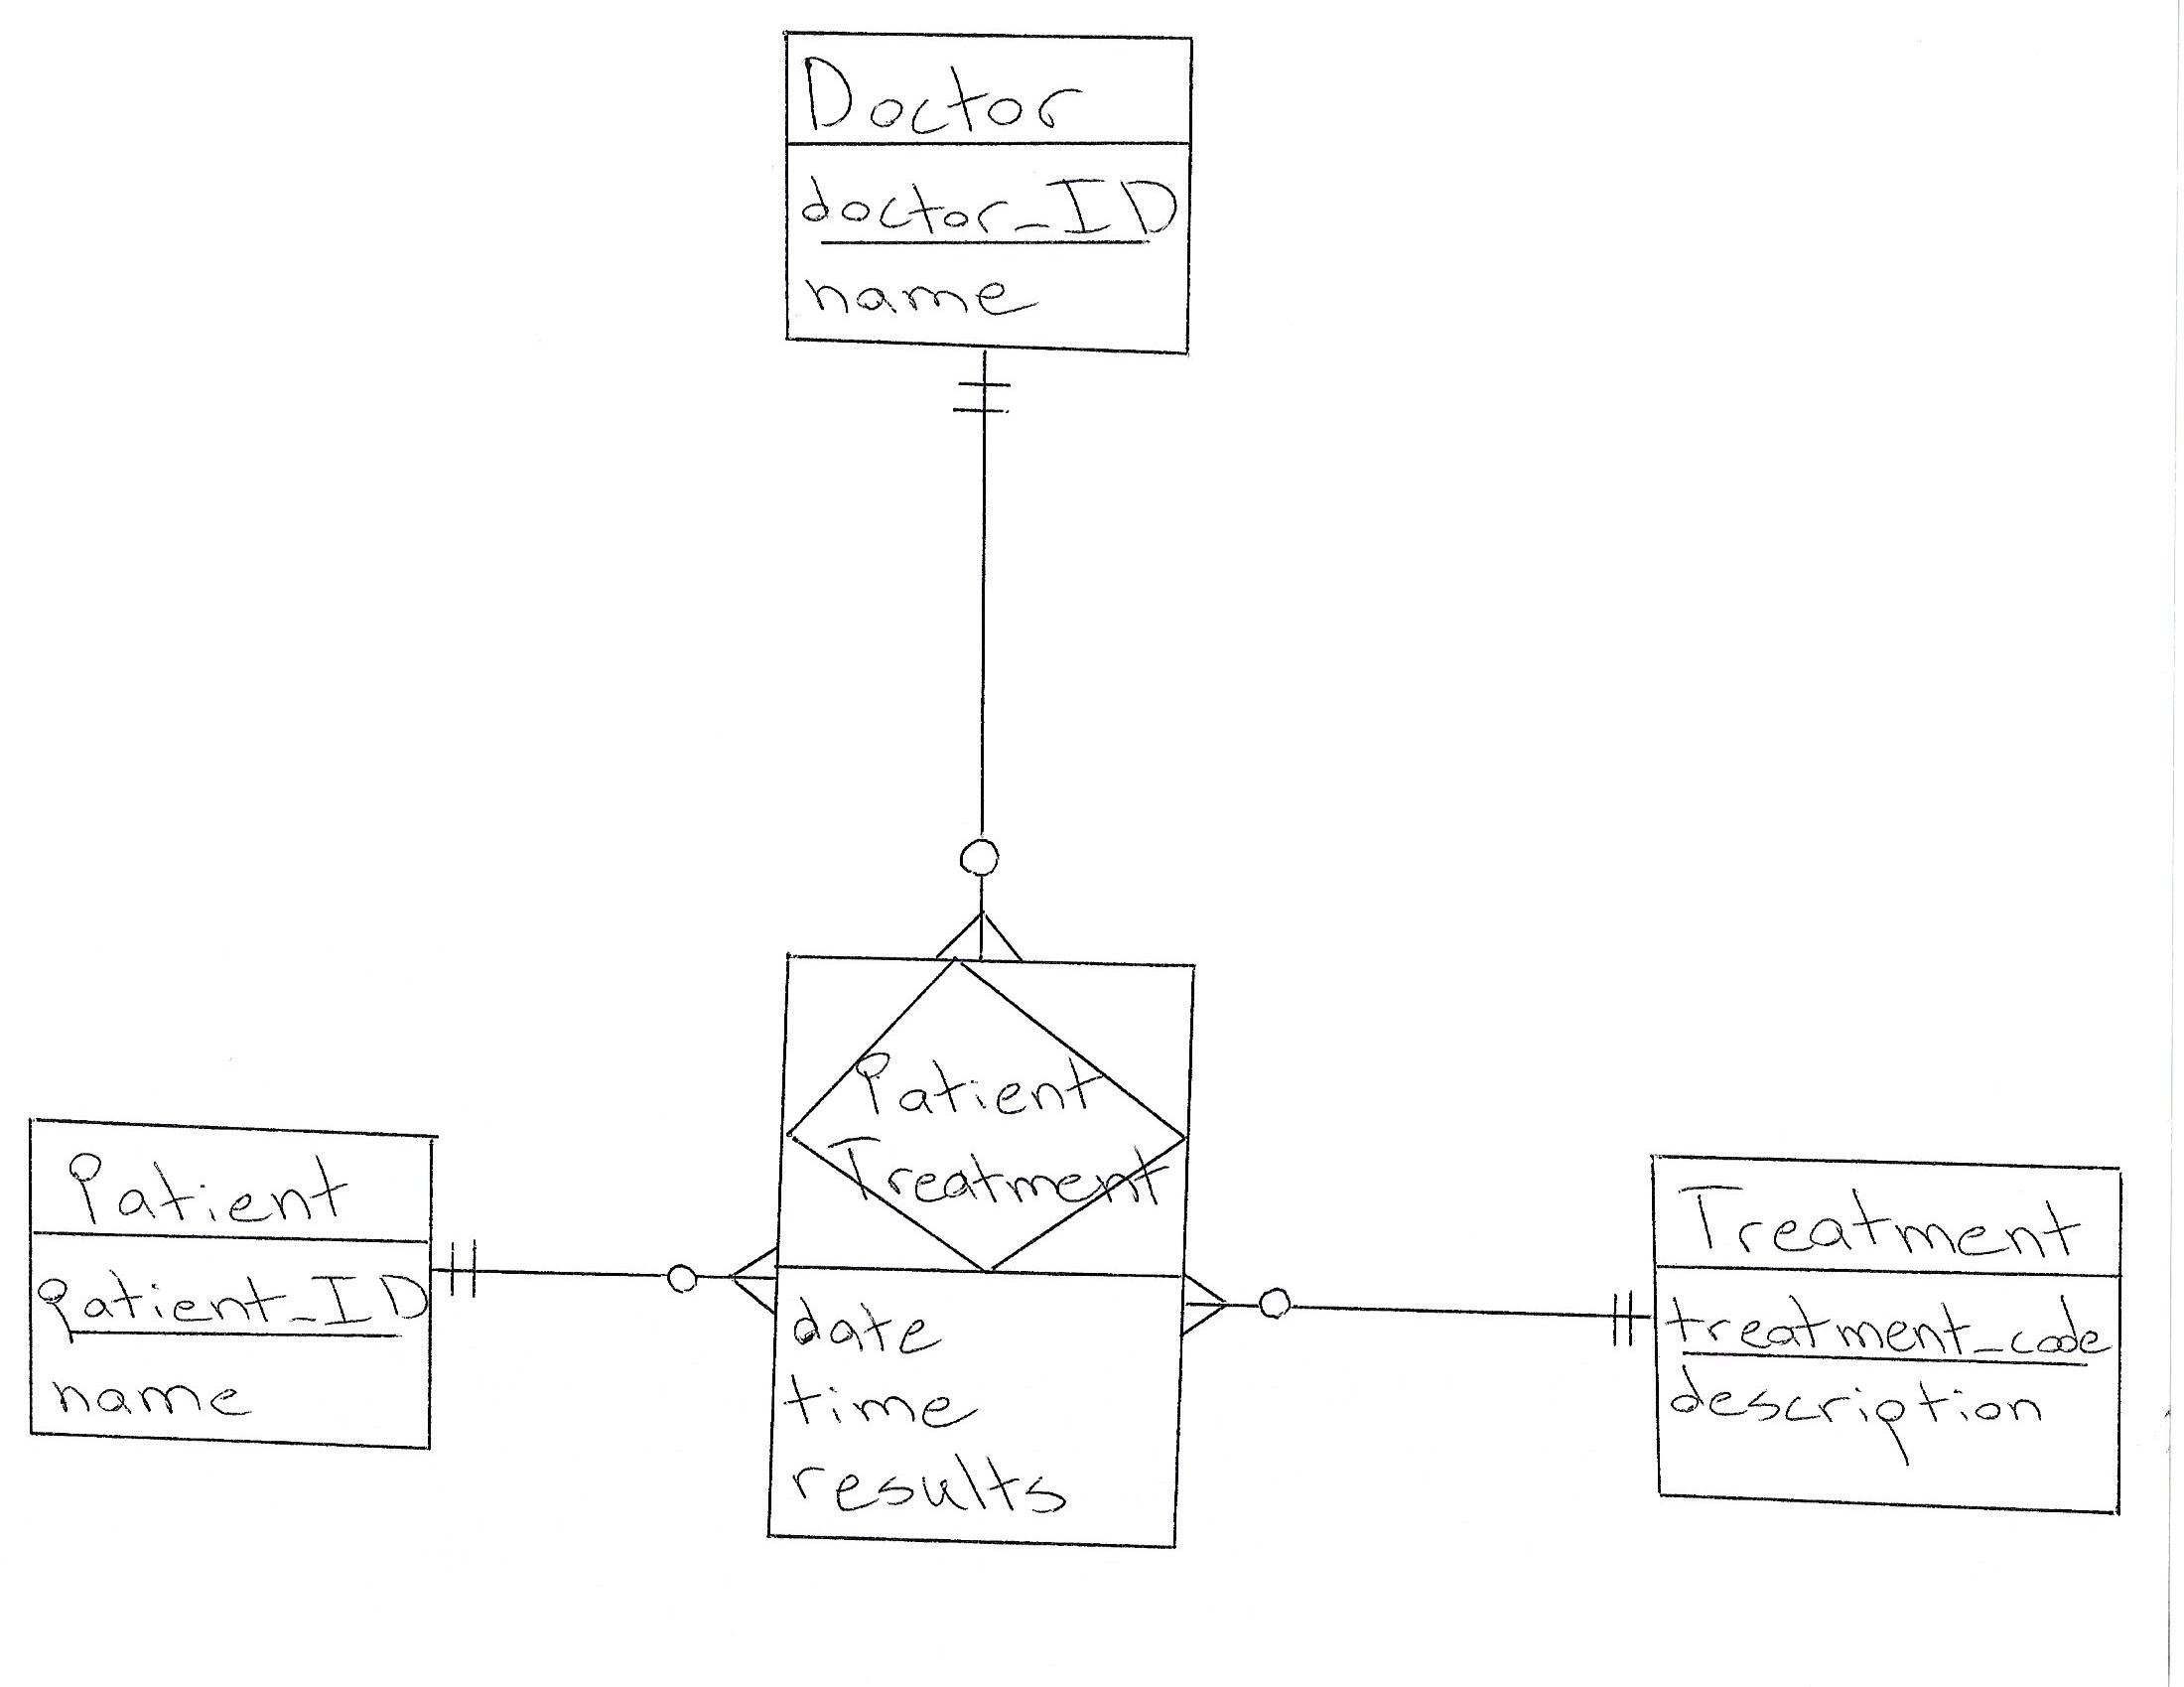 Database Design: How To Design A Database